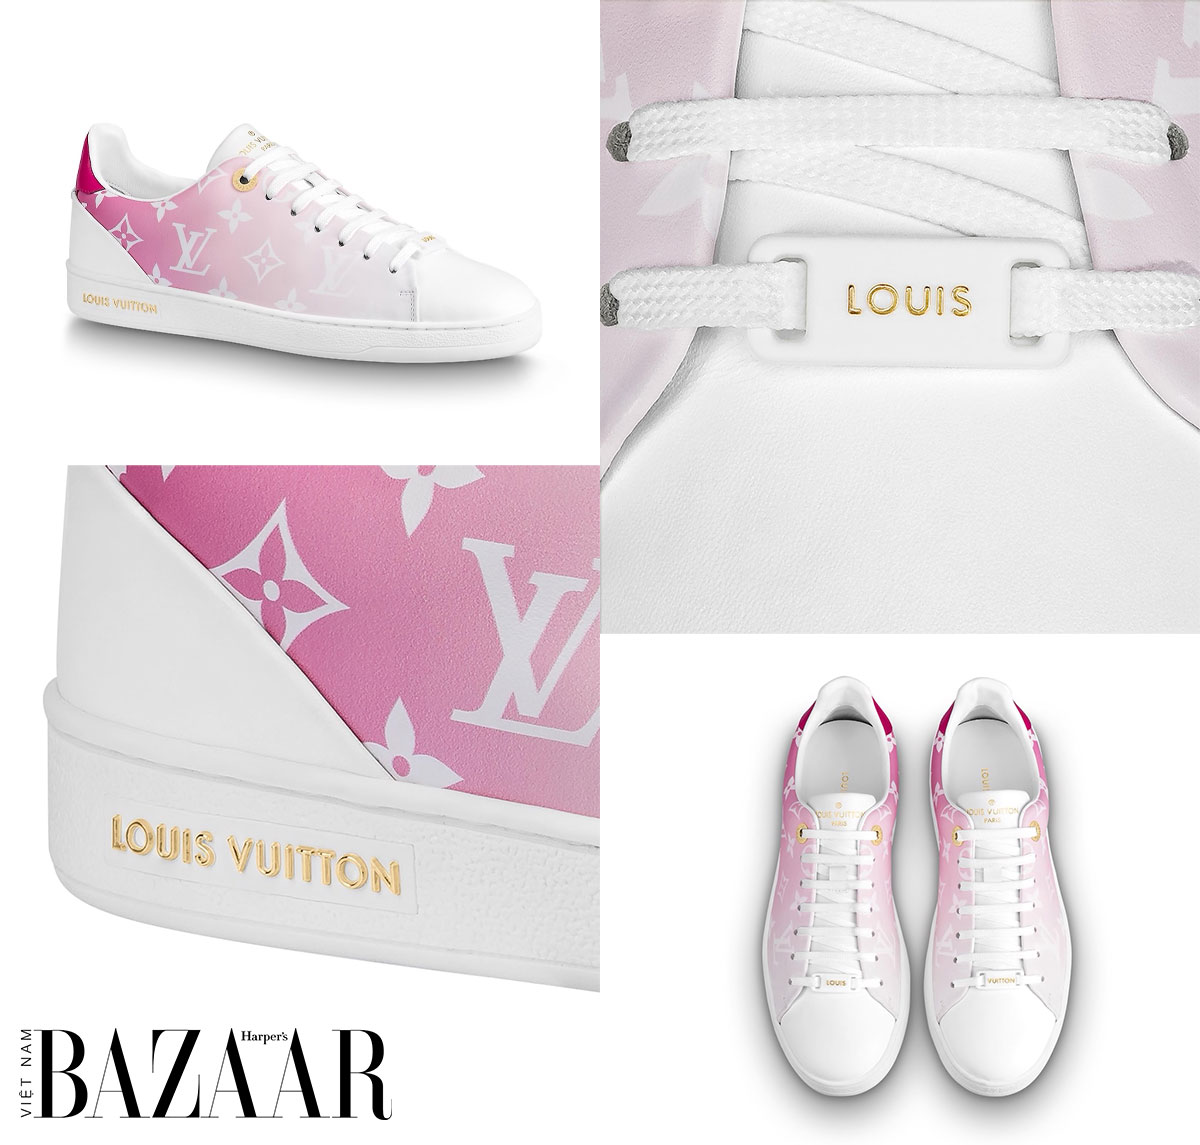 Chi tiết giày thể thao Louis Vuitto Frontrow với gam màu hồng pastel.